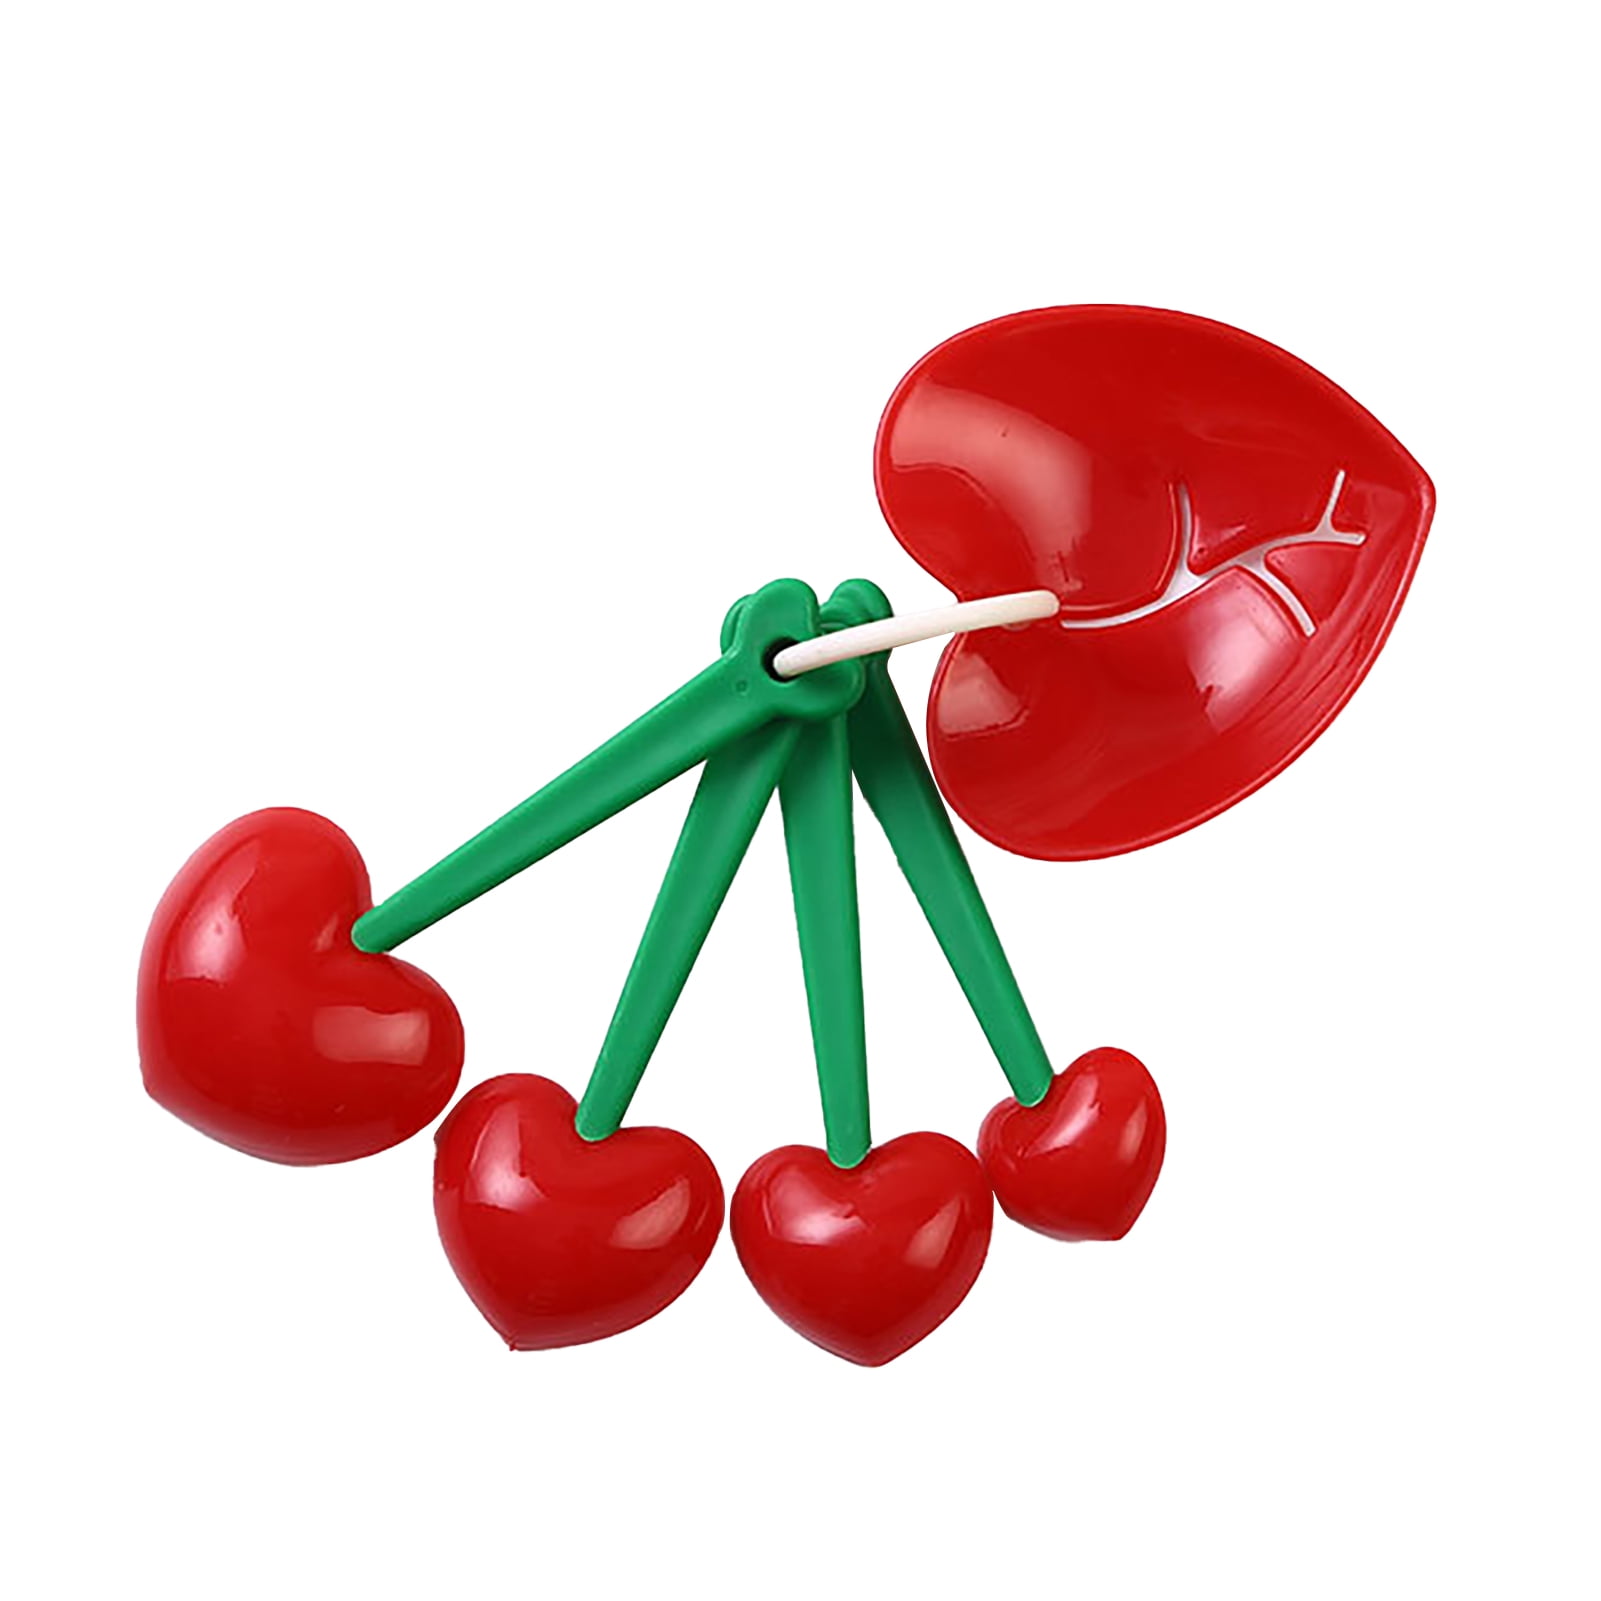 Mirro 4pc Red Measuring Spoons (1/4tsp, 1/2tsp, 1tsp, 1Tbsp) 4 Piece  MIR-11317